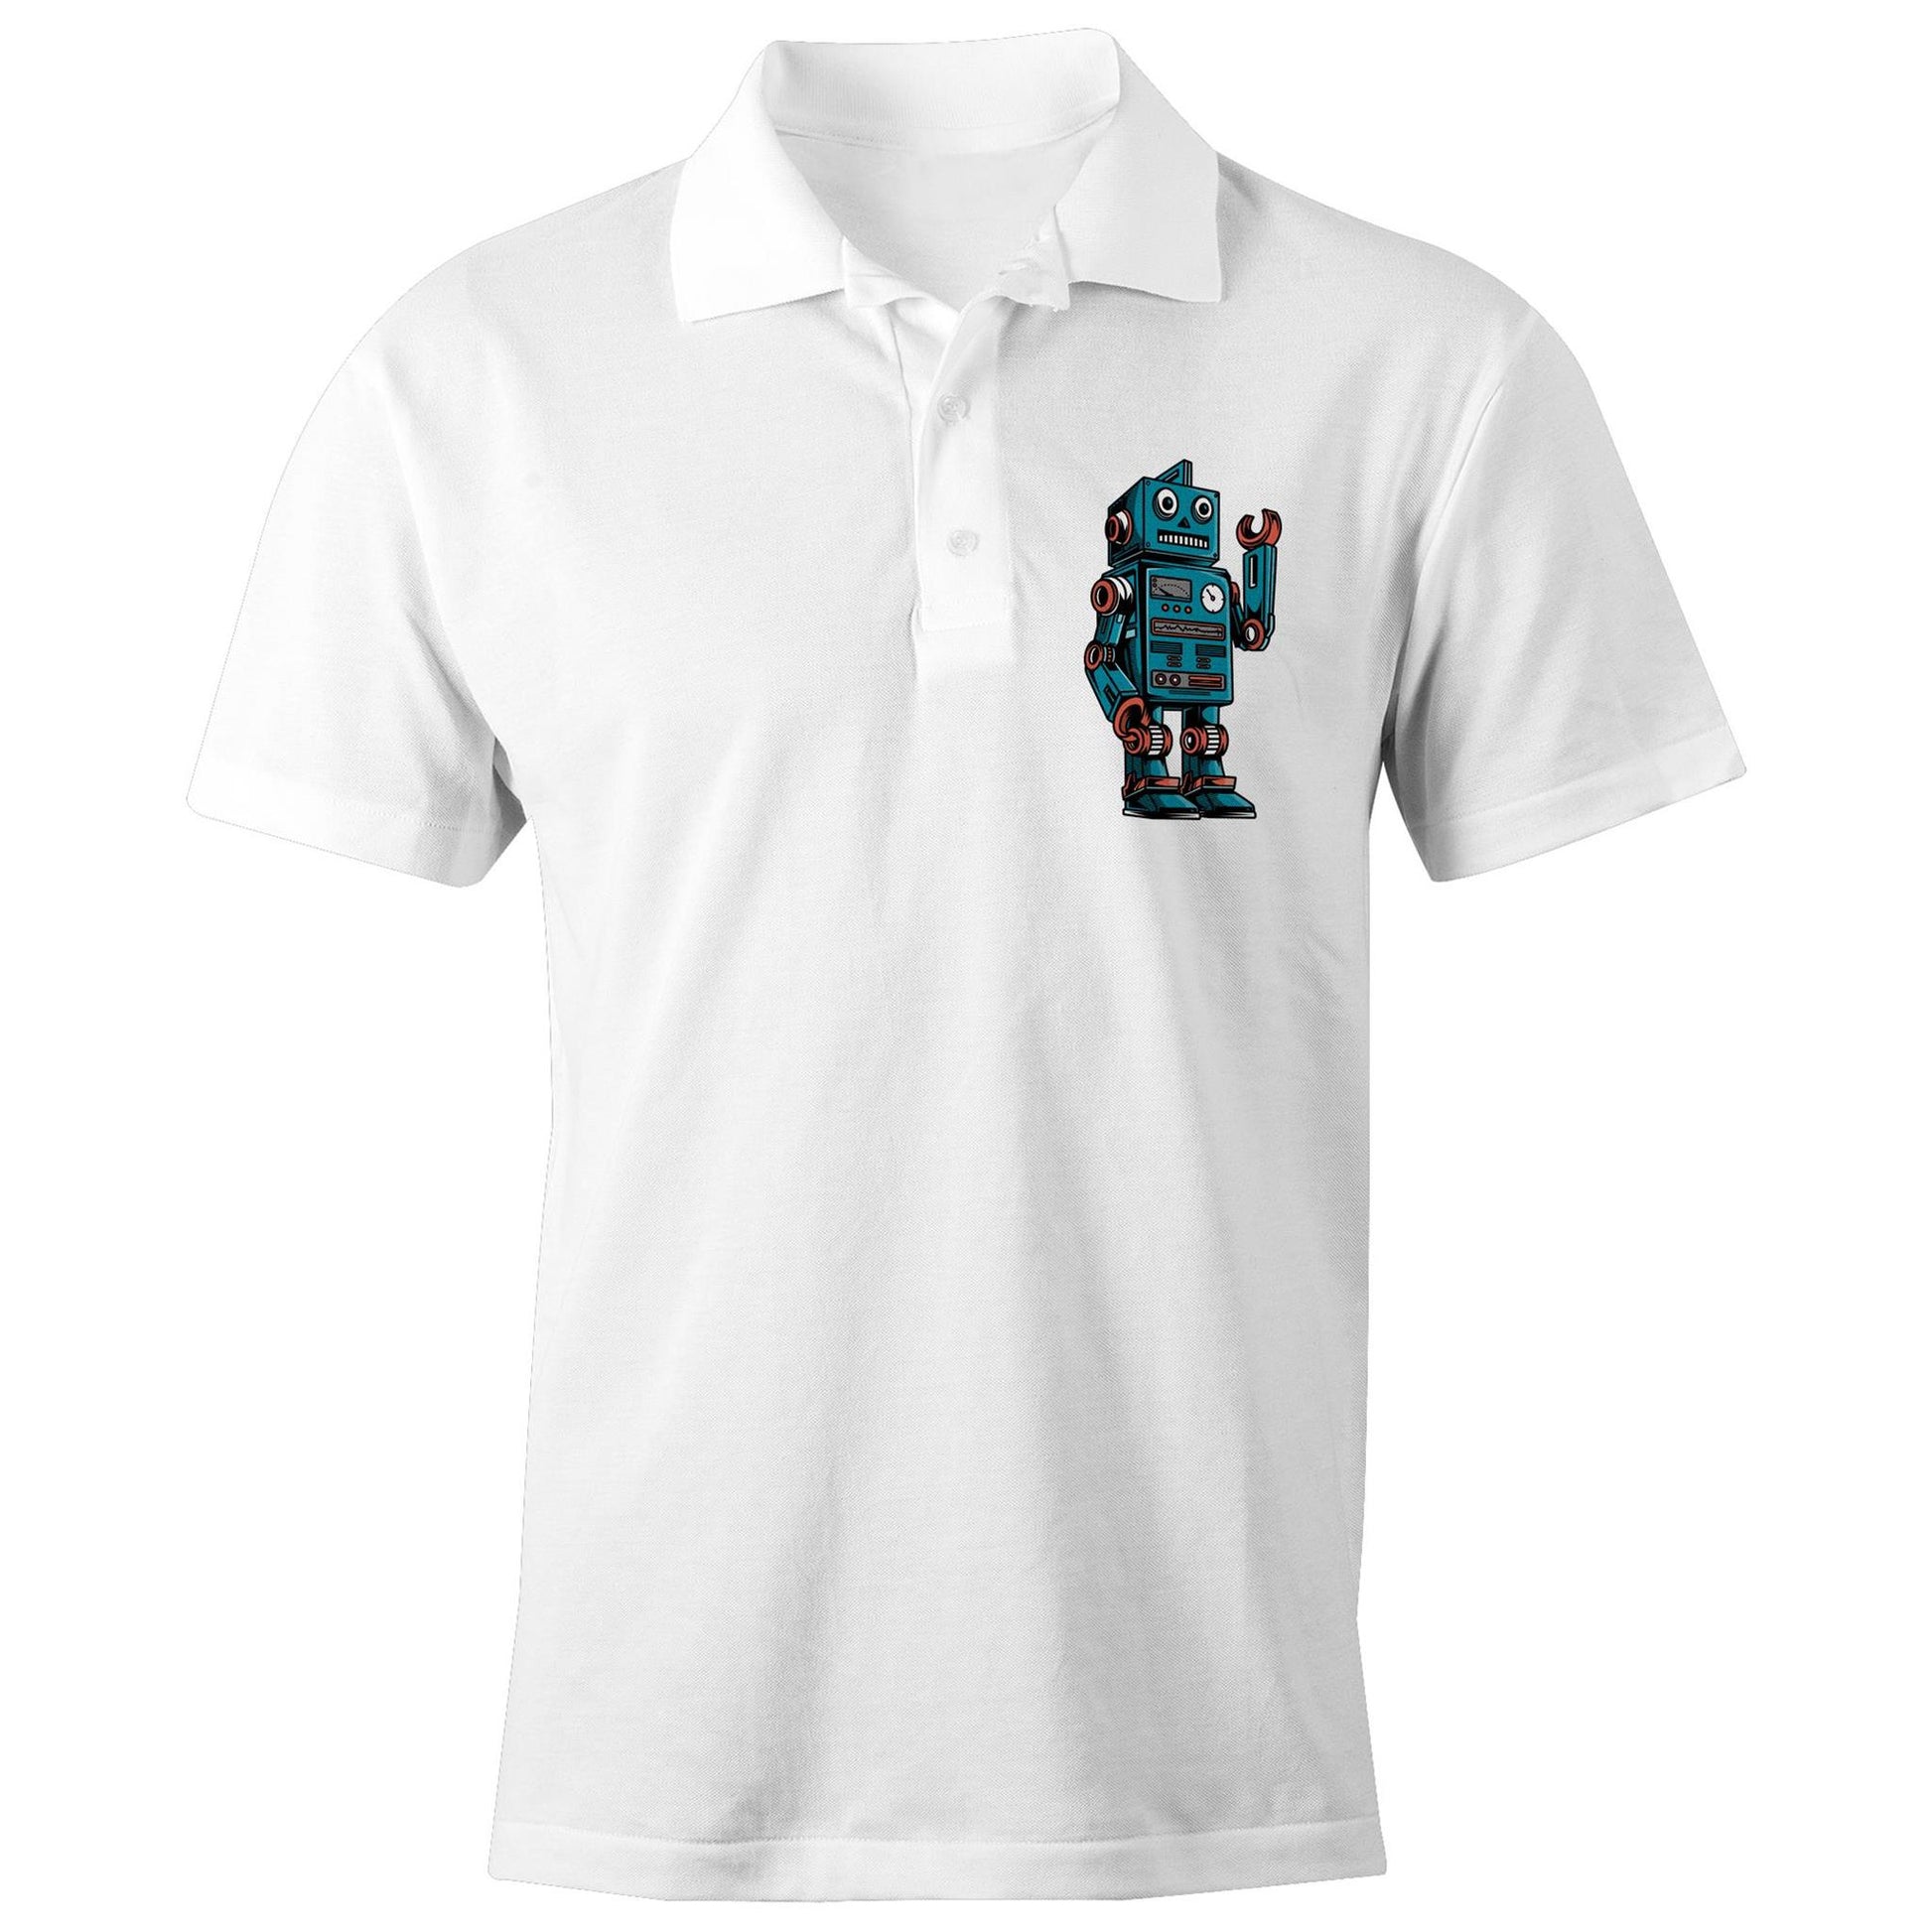 Robot - Chad S/S Polo Shirt, Printed White Polo Shirt Retro Sci Fi